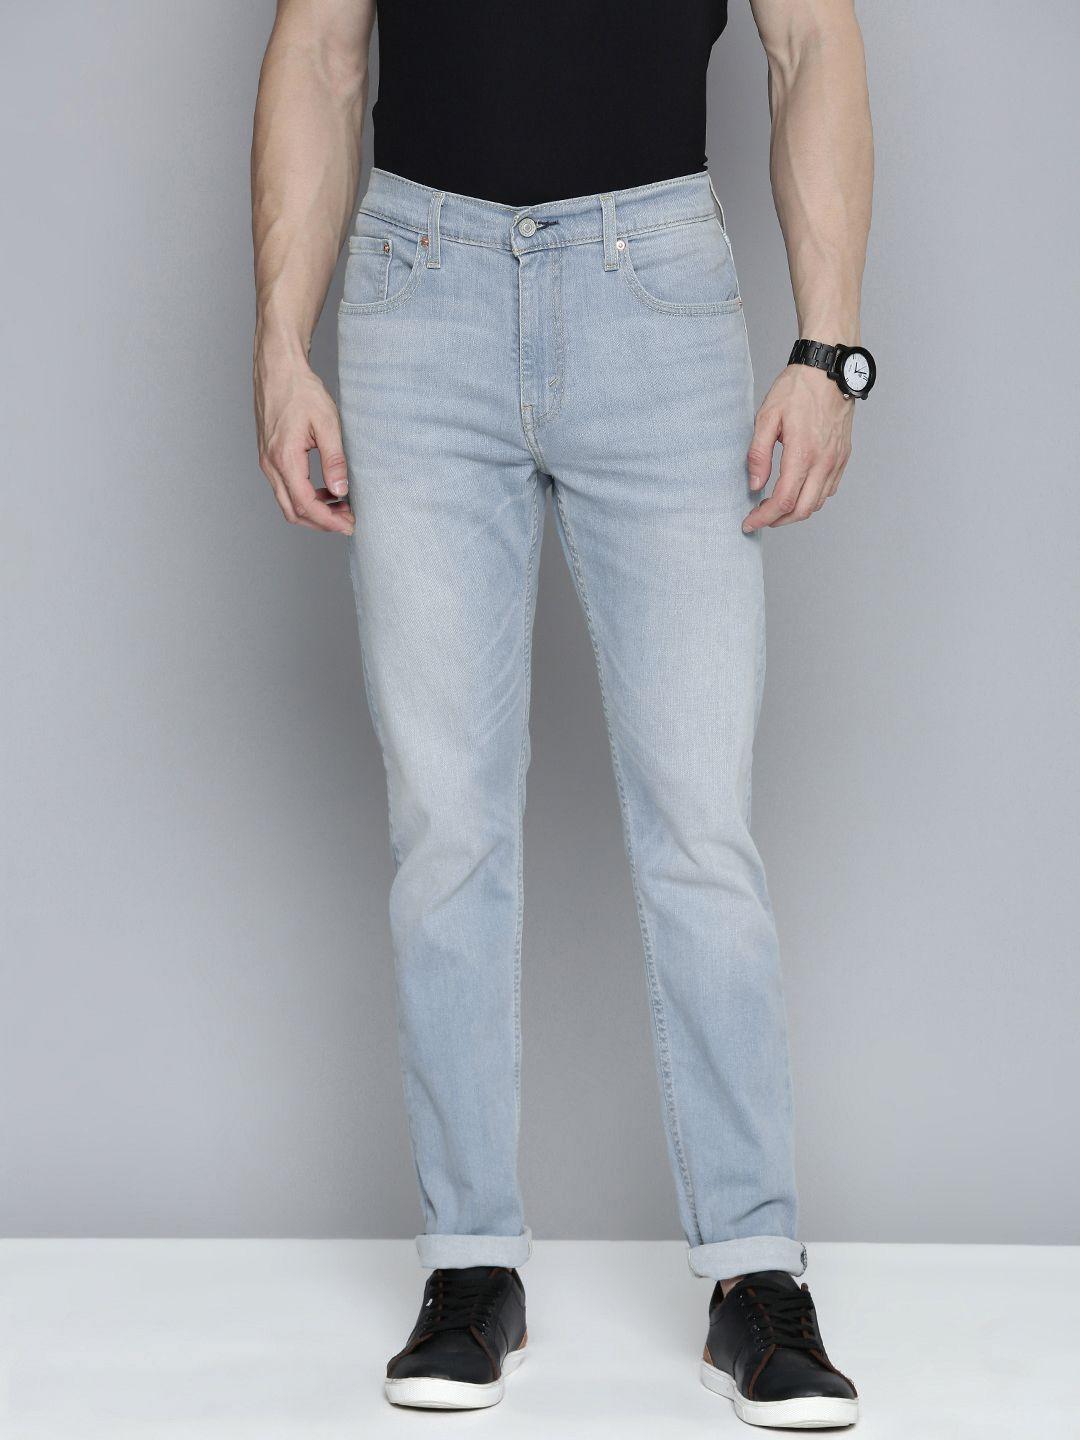 levis-men-512-slim-fit-heavy-fade-stretchable-jeans